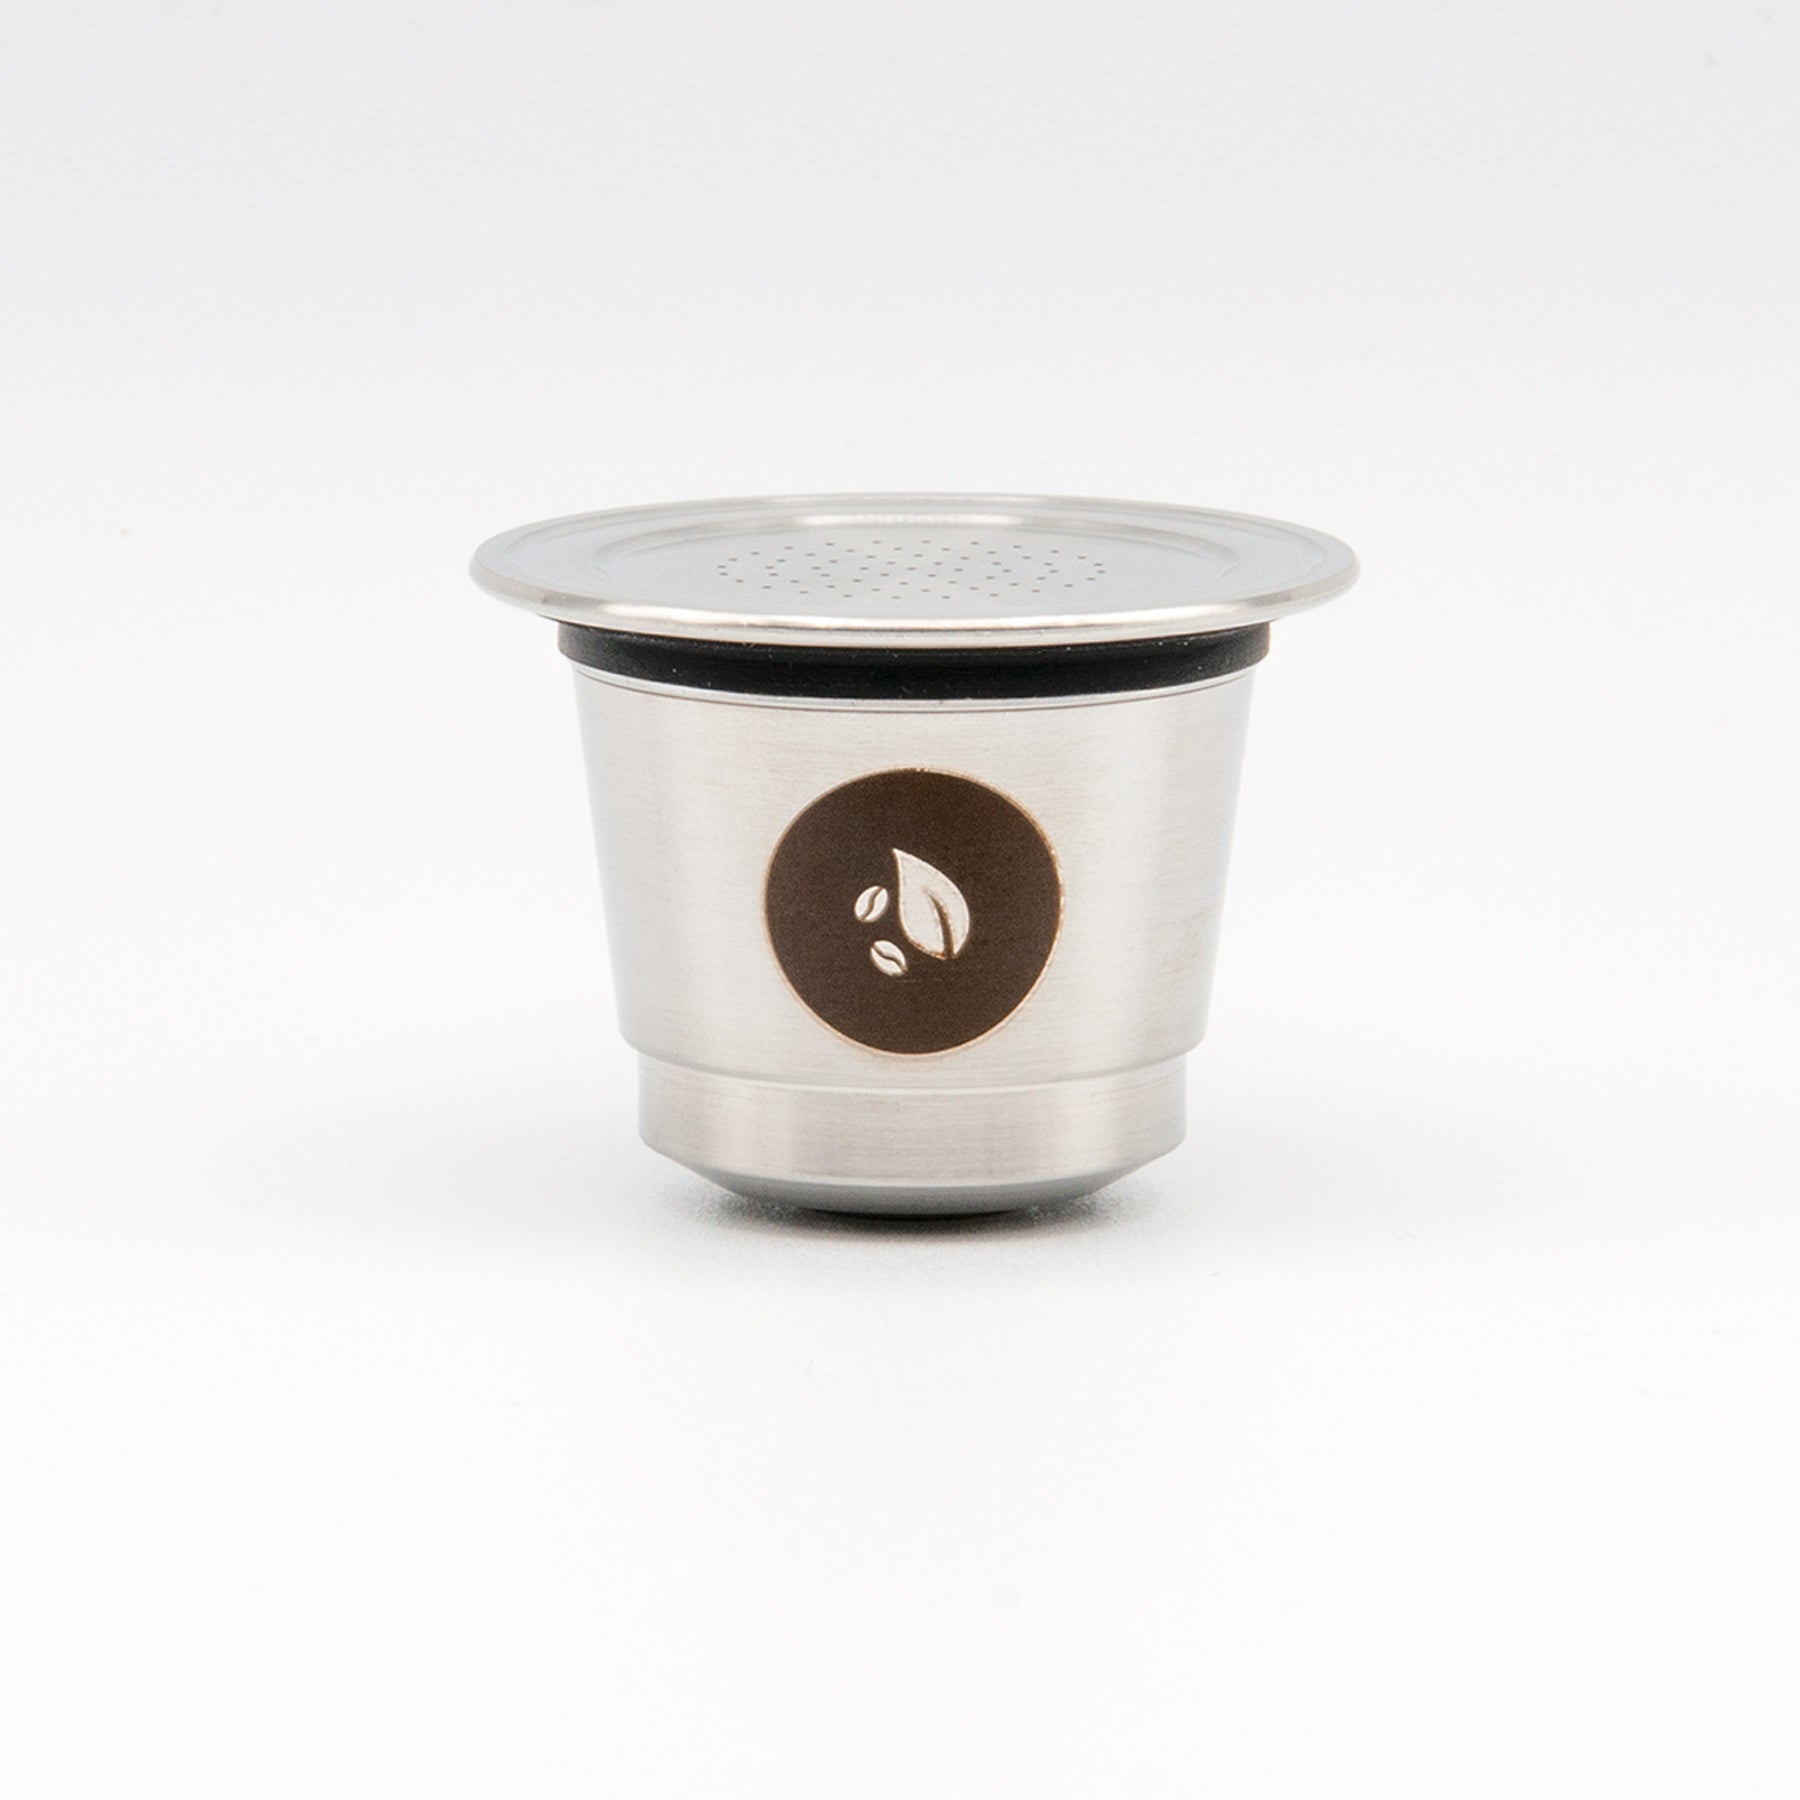 Les capsules Nespresso rechargeables : guide d'achat